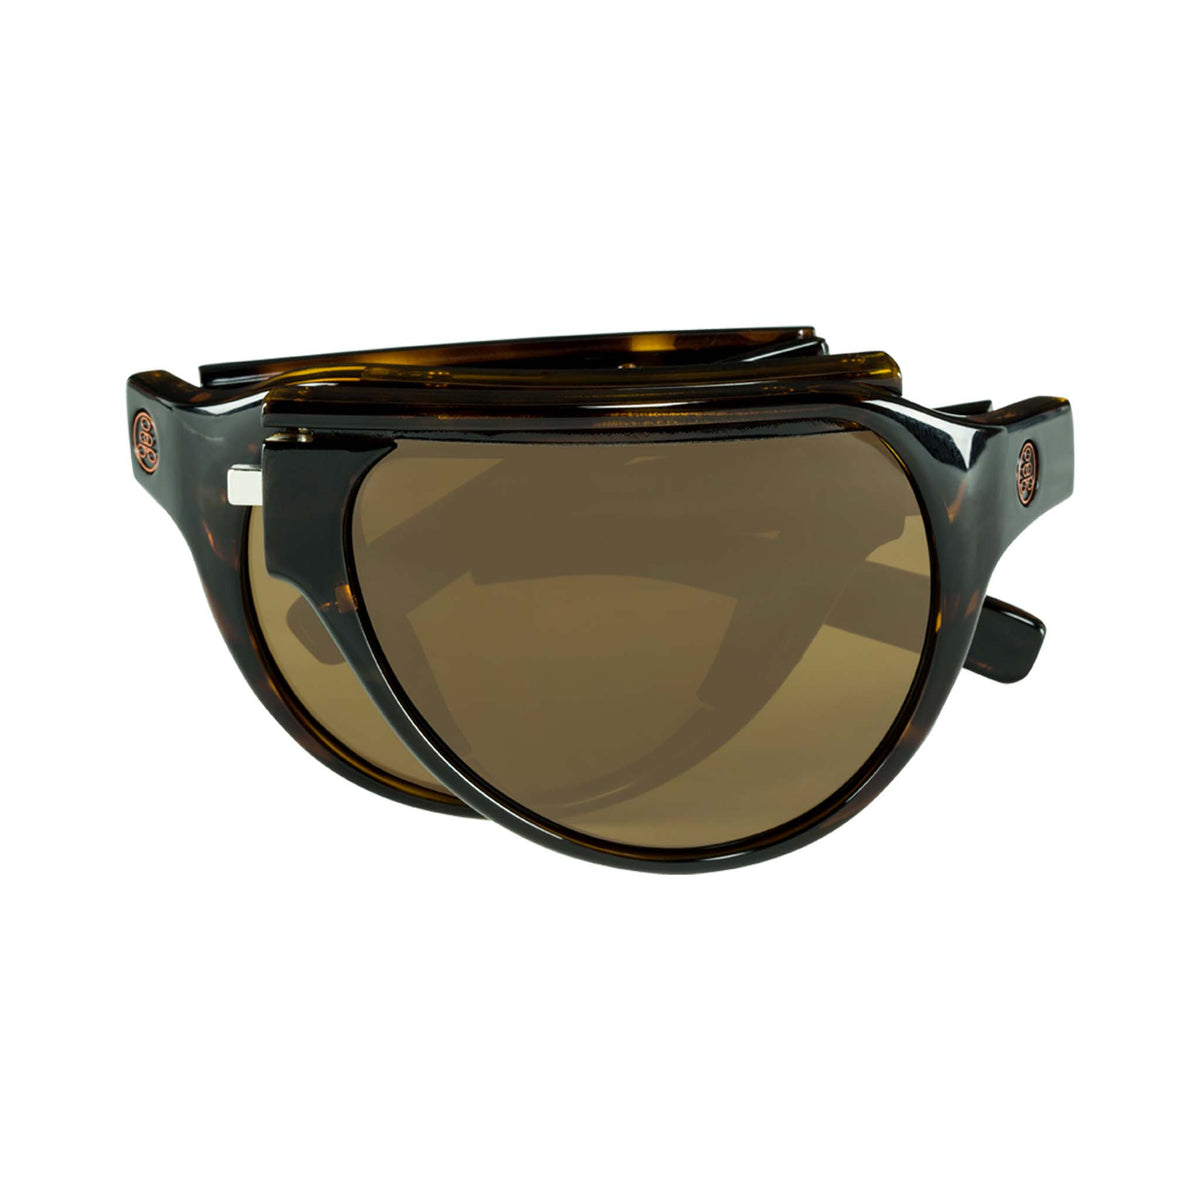 Popticals, Premium Compact Sunglasses, PopAir, 300010-CTNP, Polarized Sunglasses, Gloss Tortoise Frame, Brown Lenses, Compact View